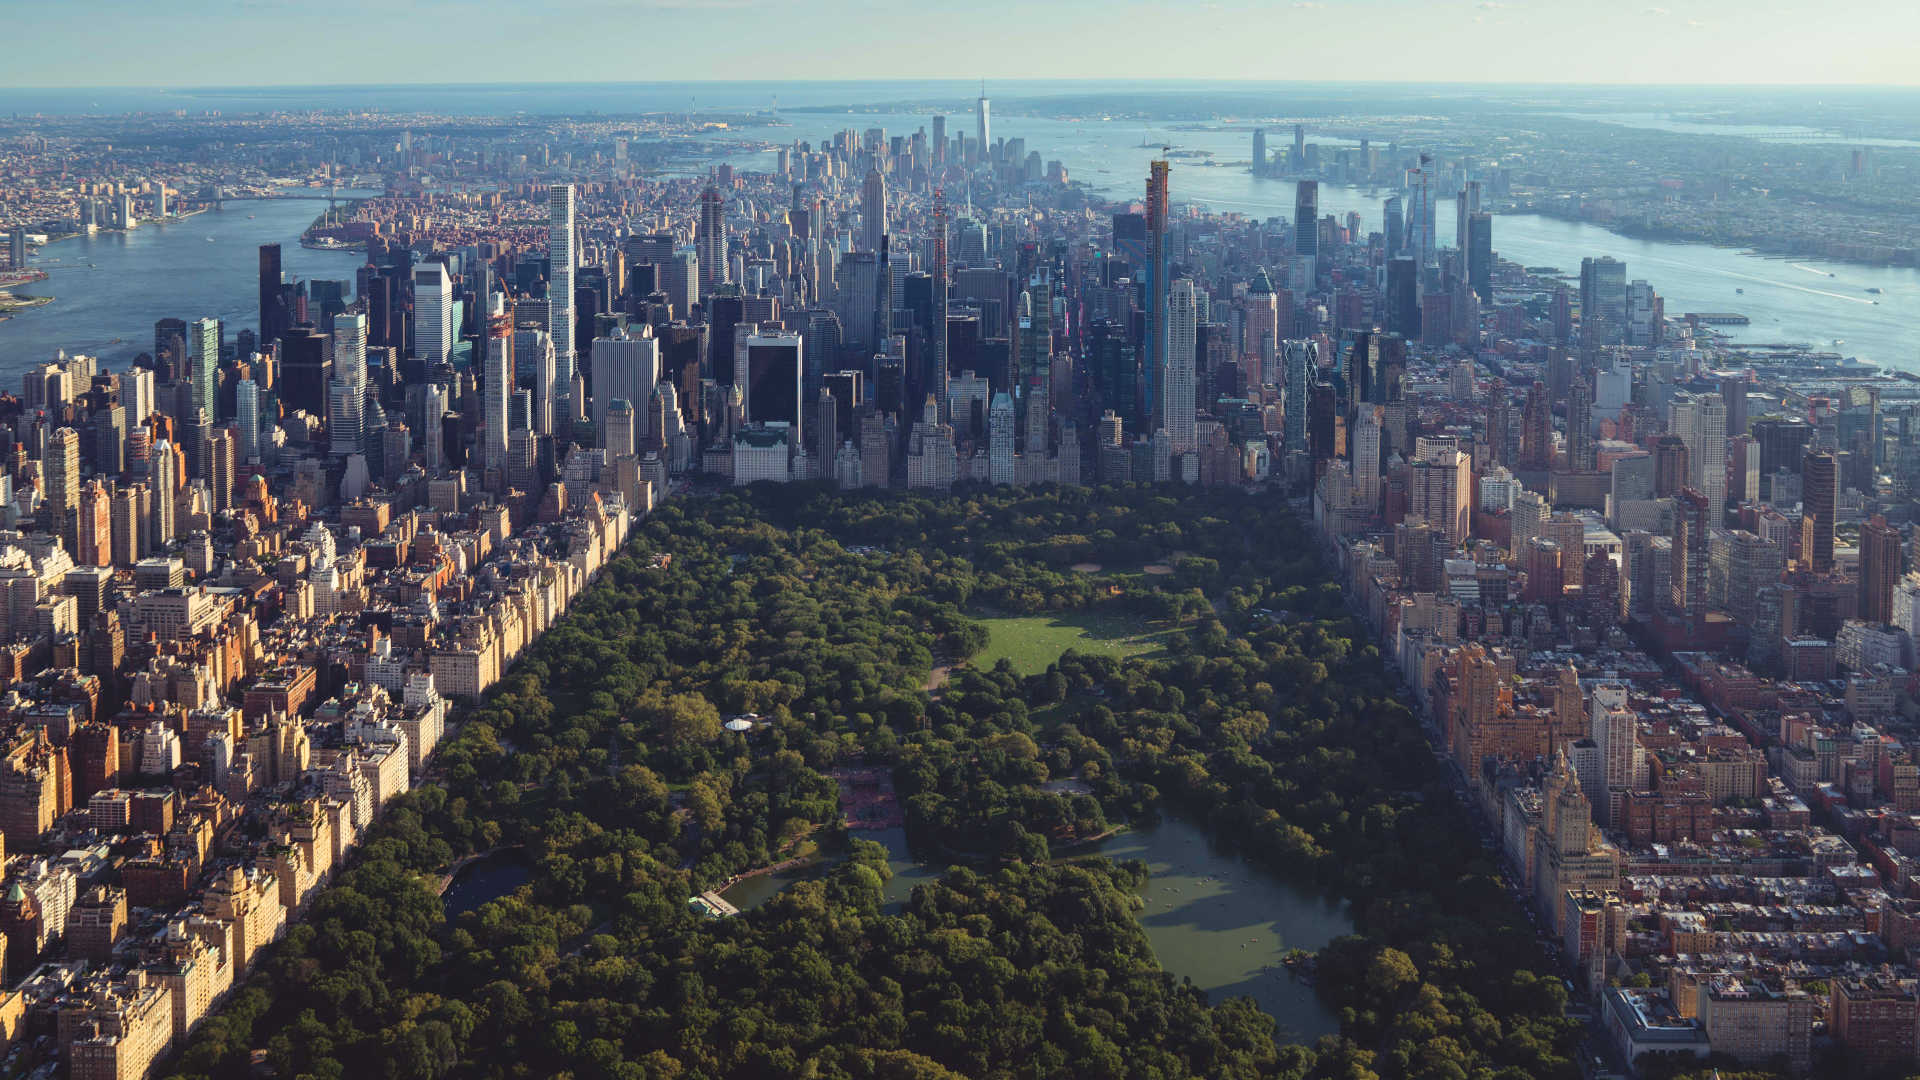 Central Park in Manhattan, New York City.